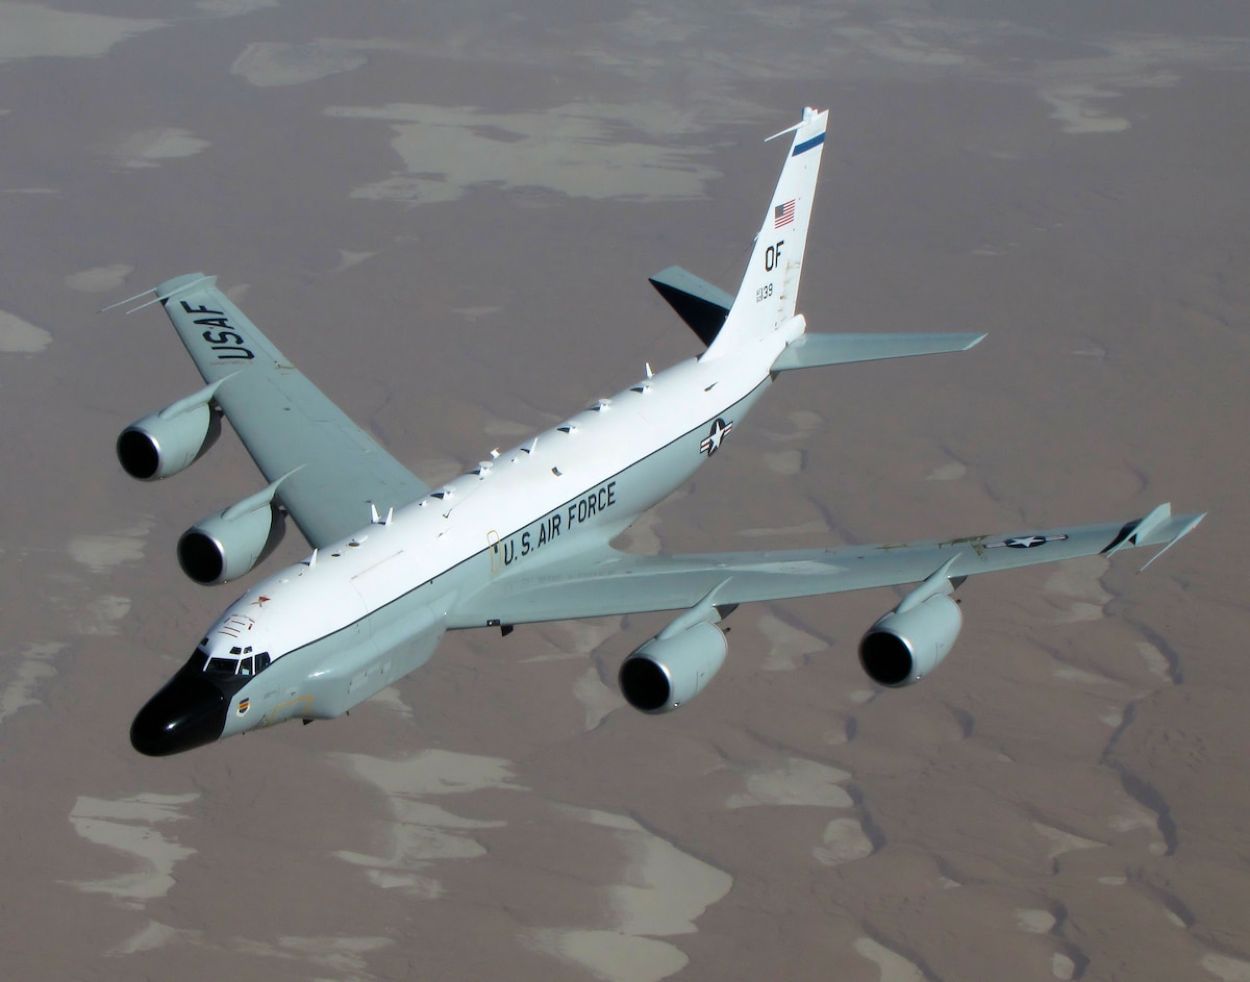 US Air Force's RC-135W spy plane